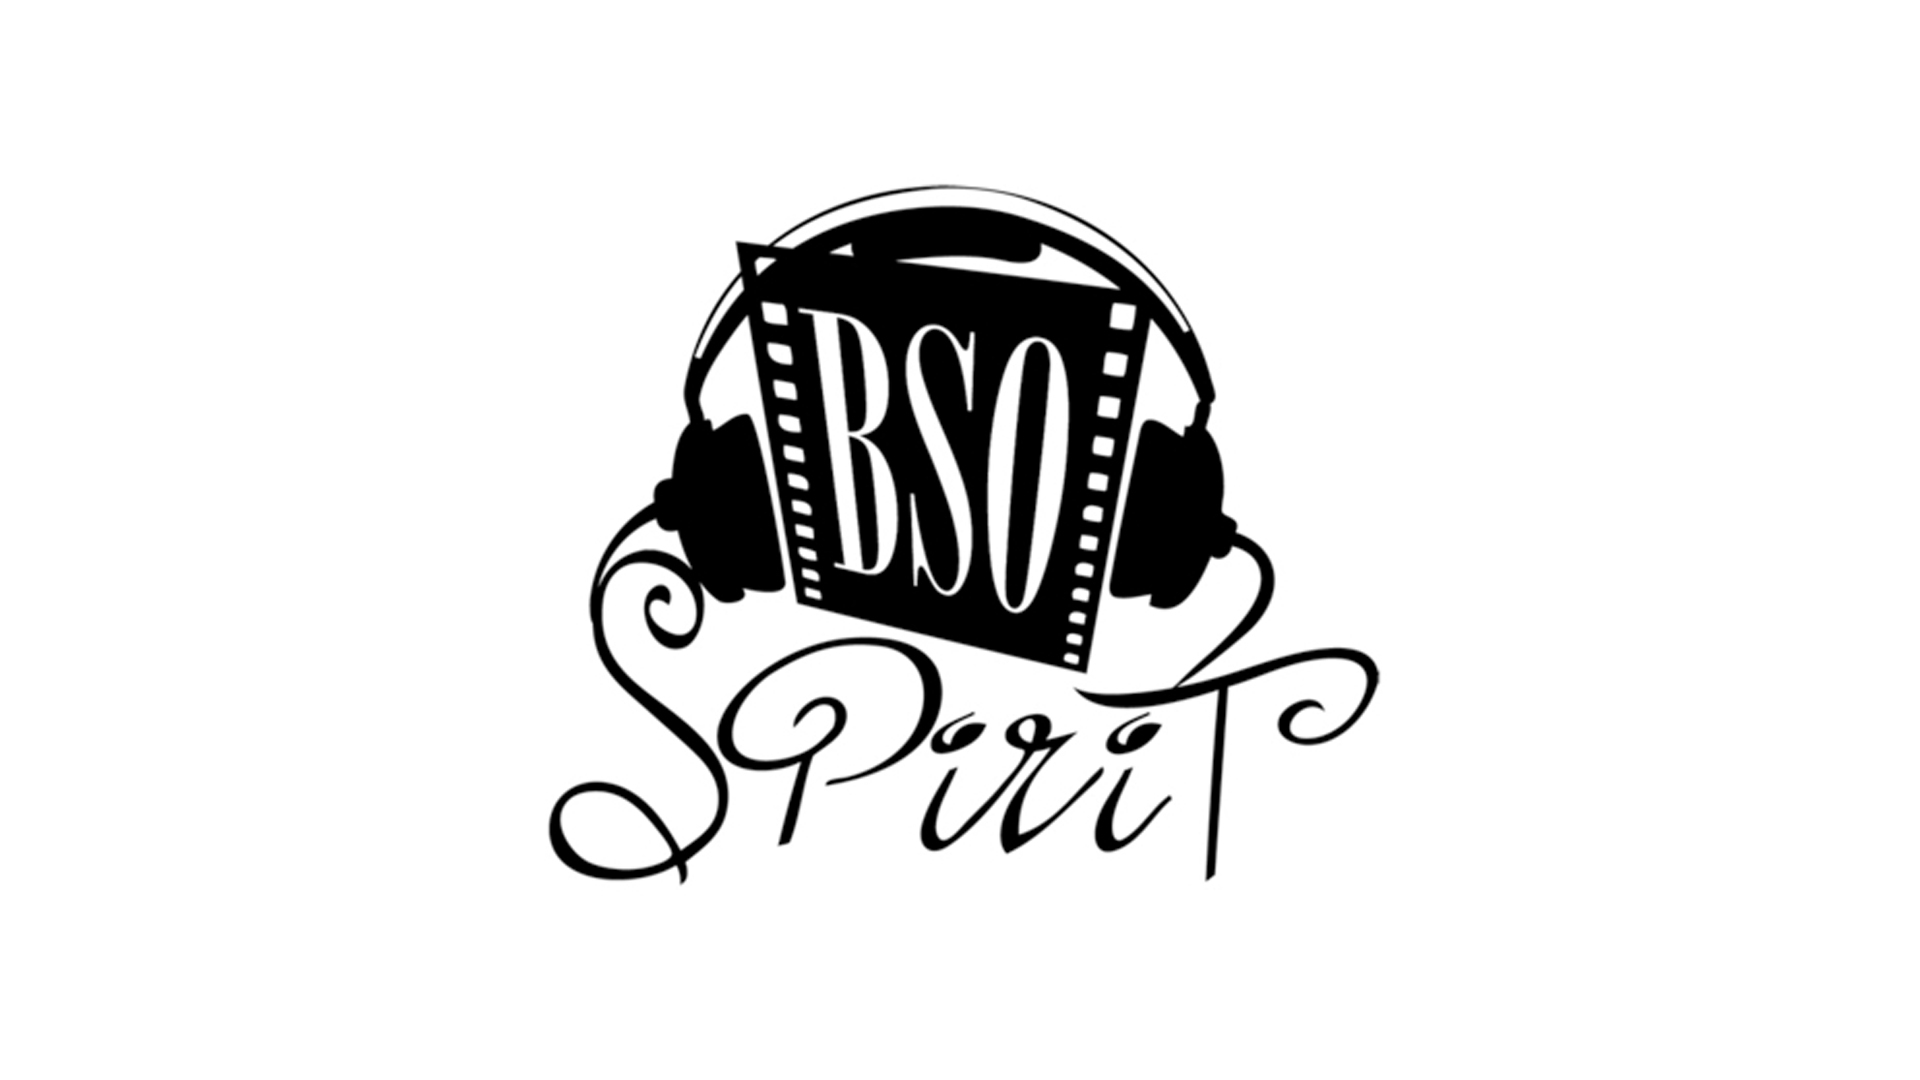 BSO Spirit Awards